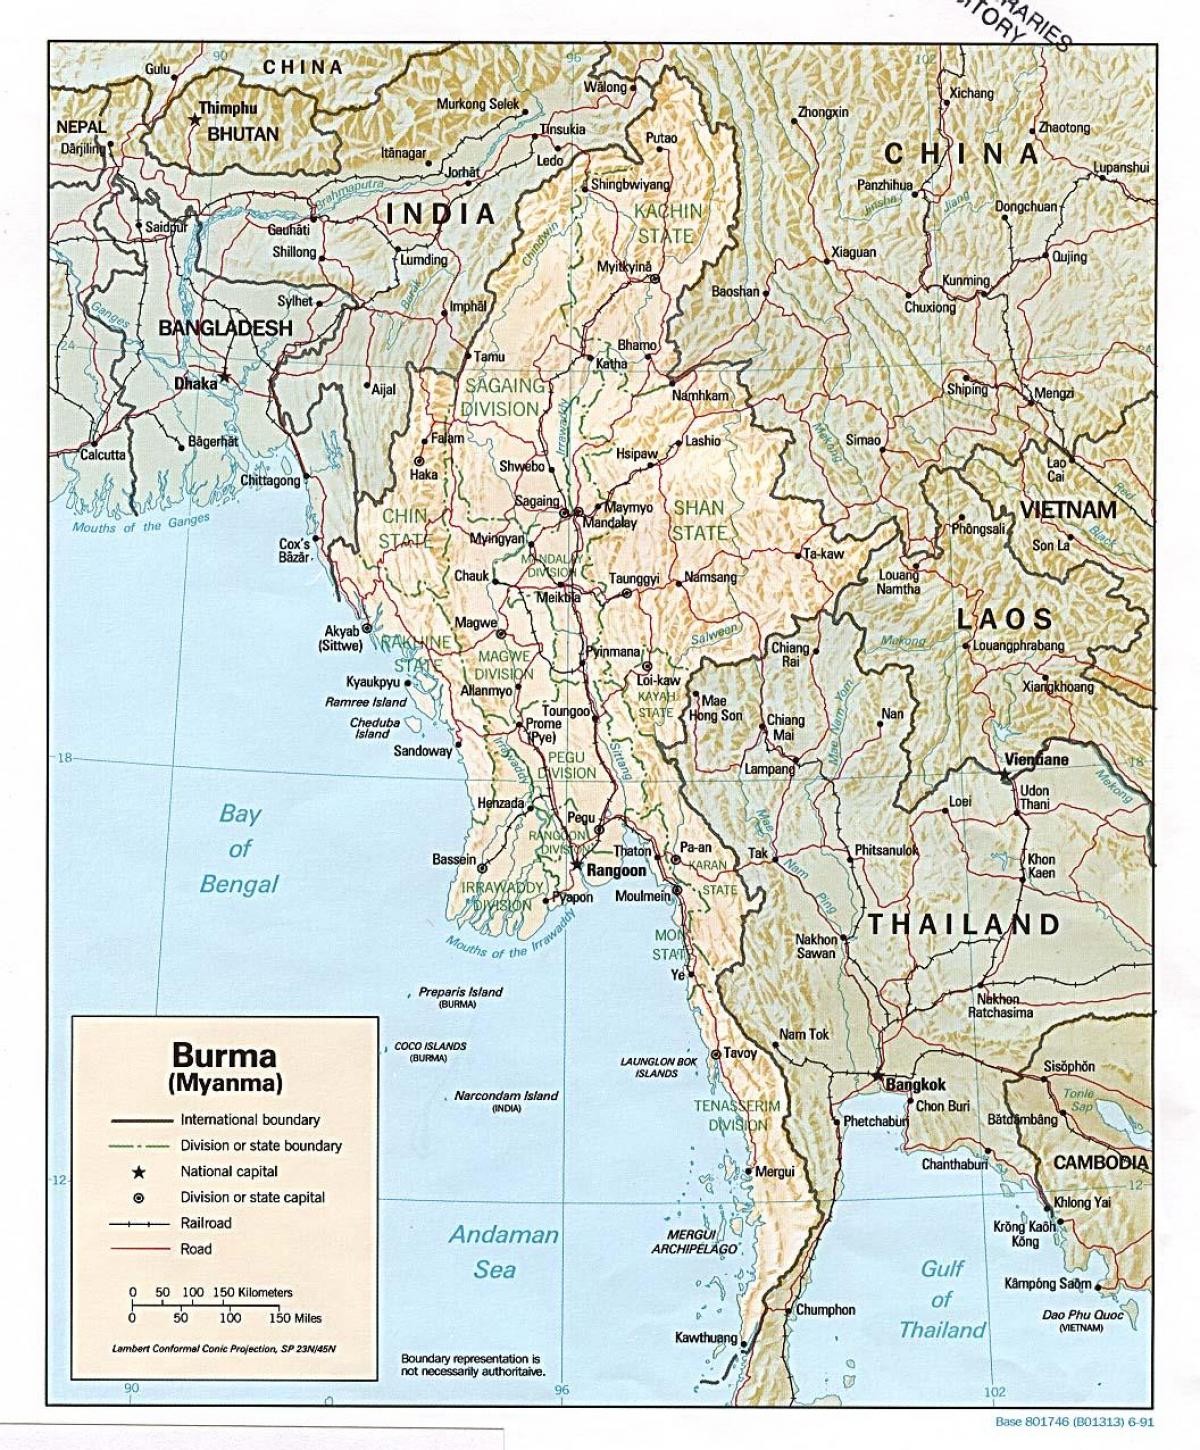 off-line Myanmar mapu